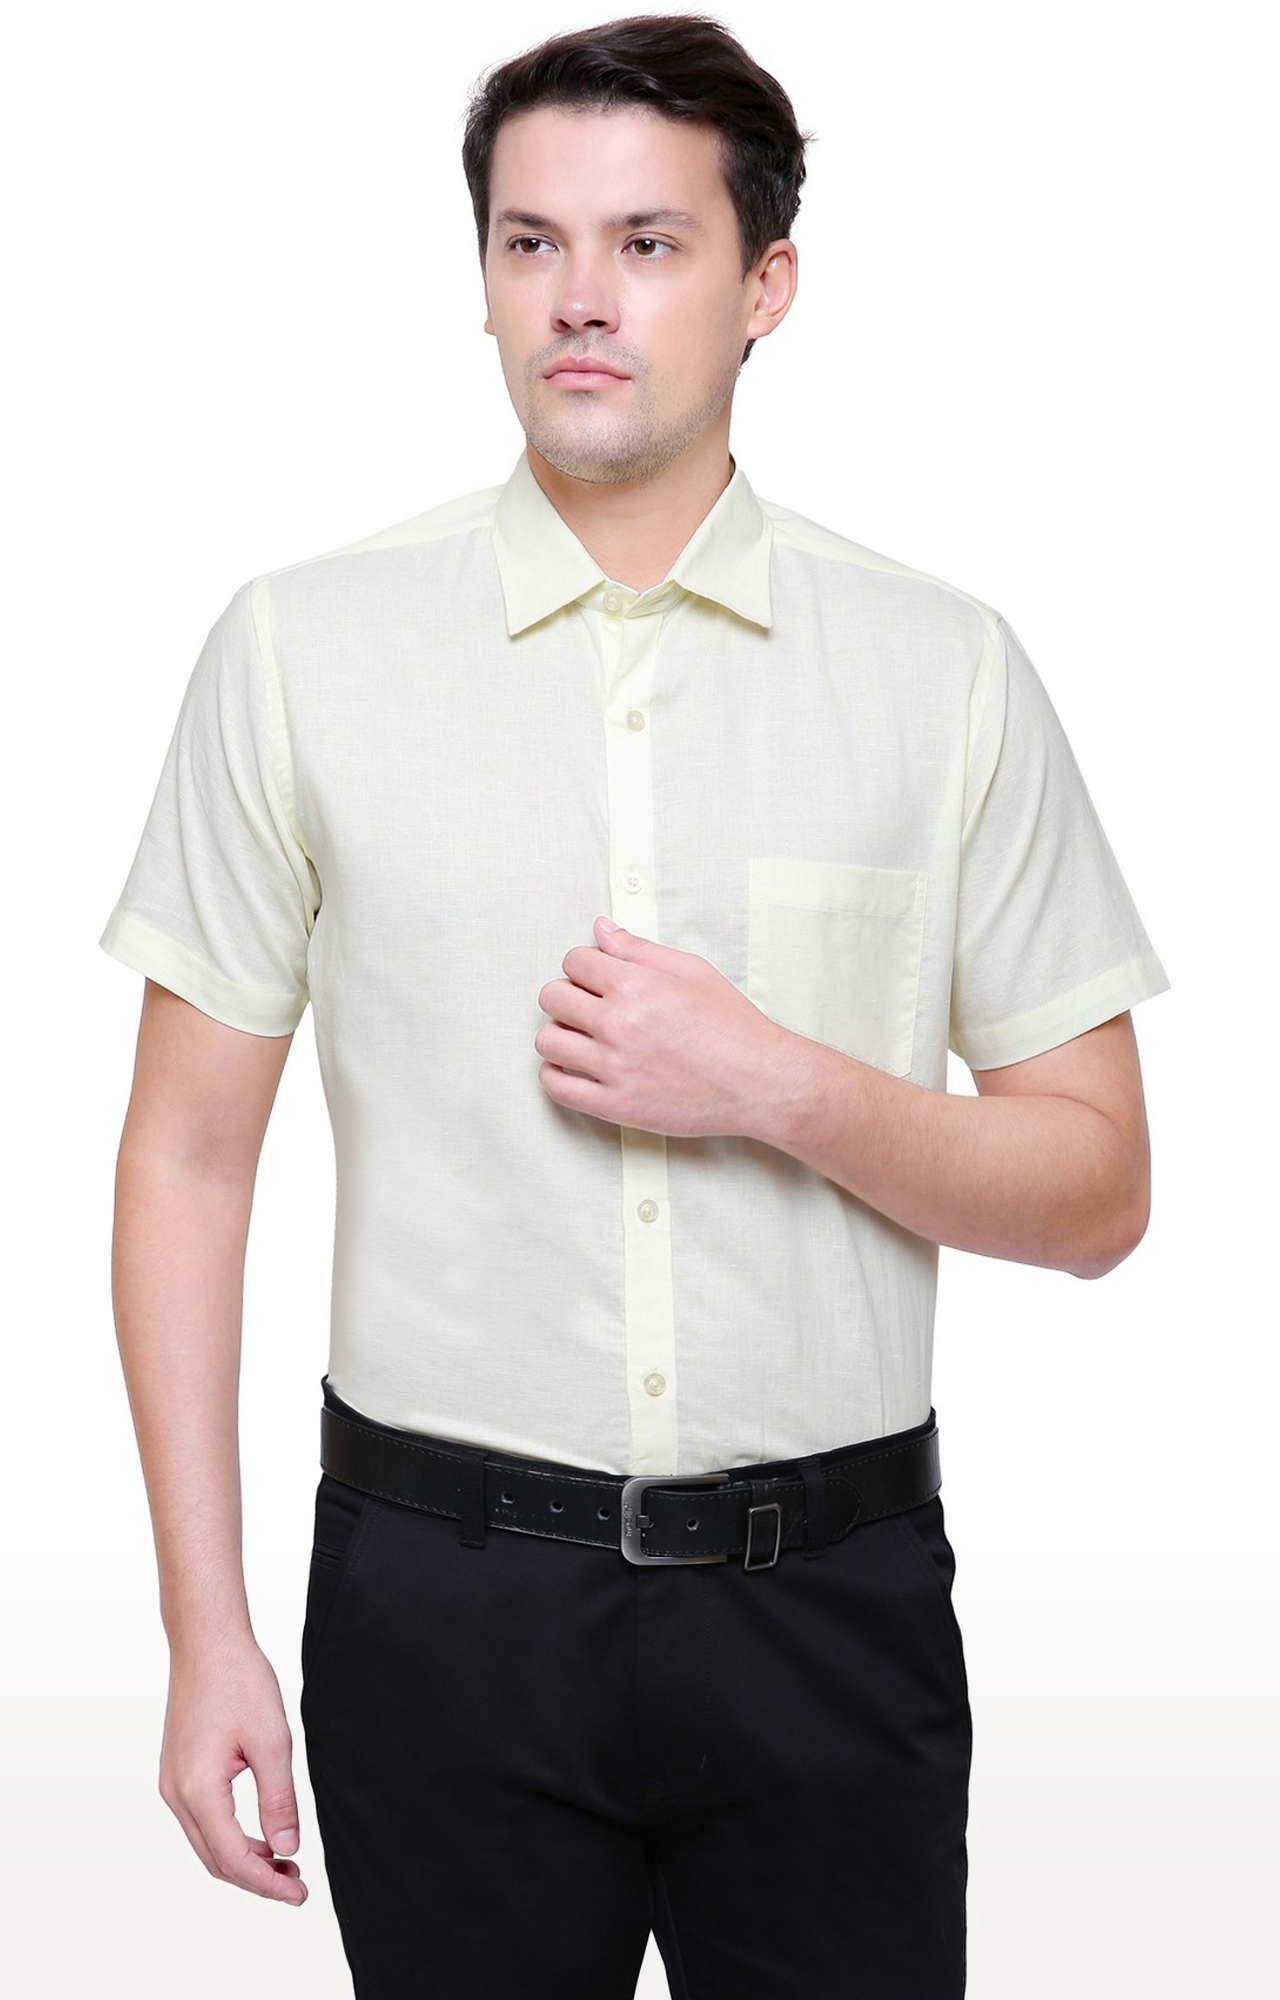 Southbay | Southbay Men's Light Yellow Half Sleeve Linen Cotton Formal Shirt